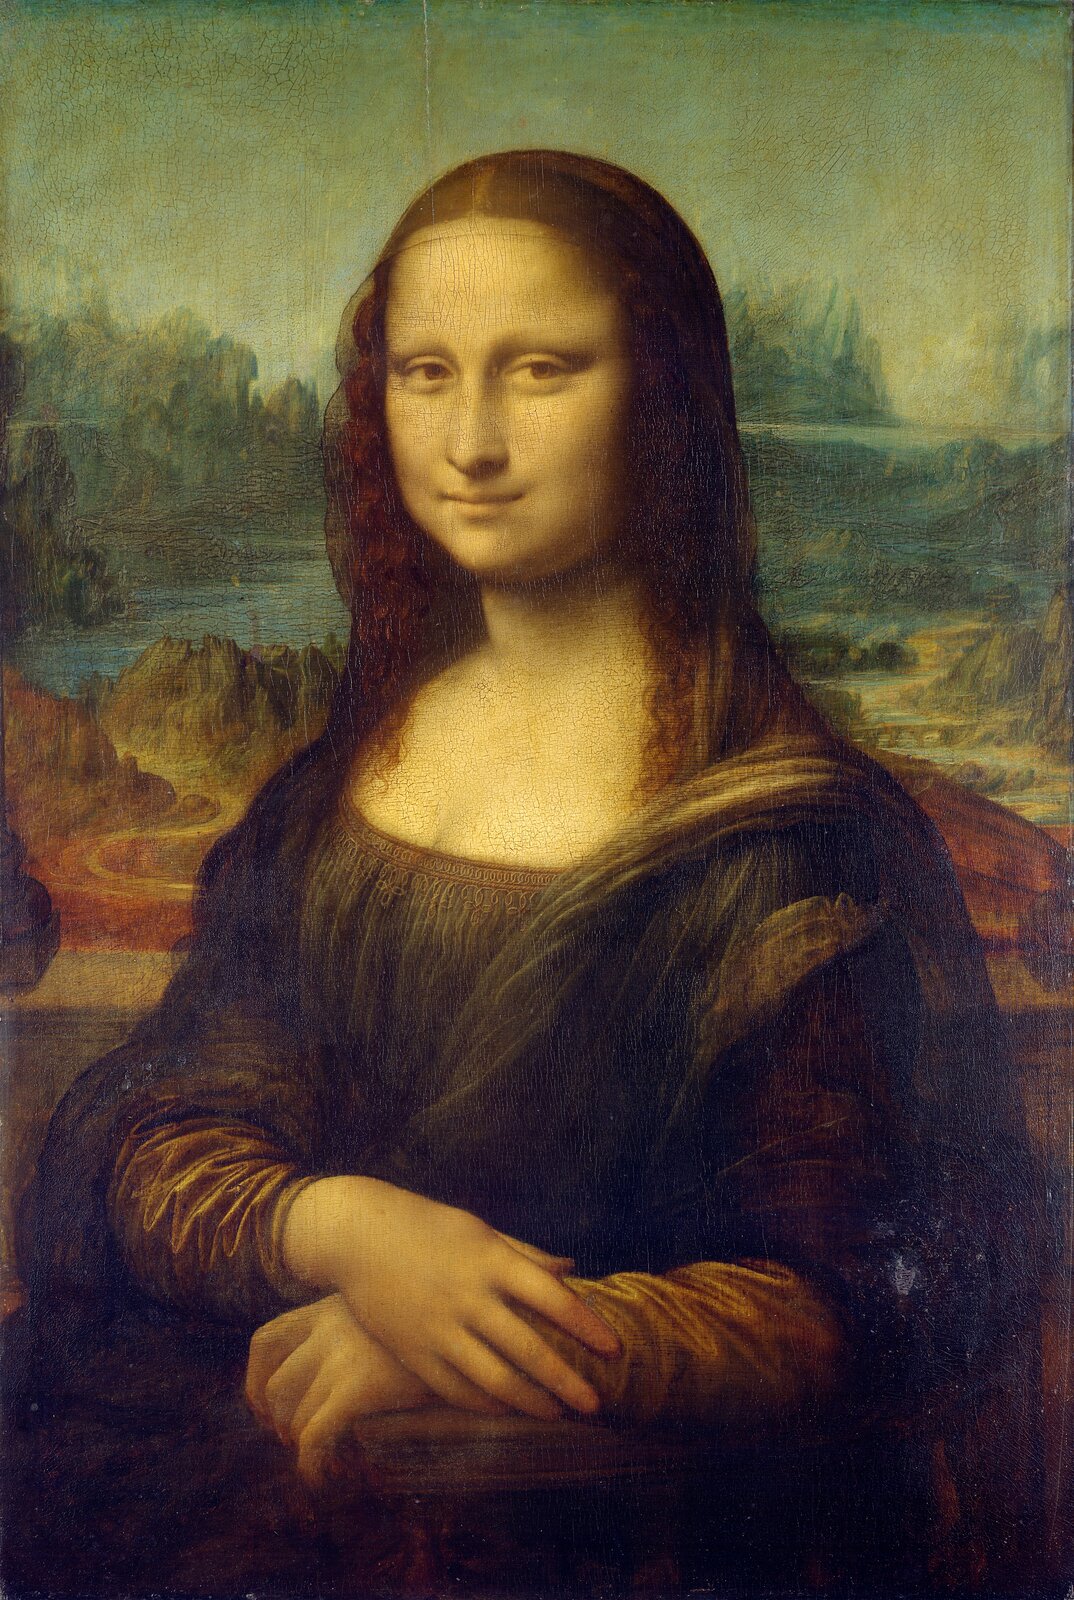 Ilustracja przedstawia obraz Leonarda da Vinciego pt. "Mona Lisa".